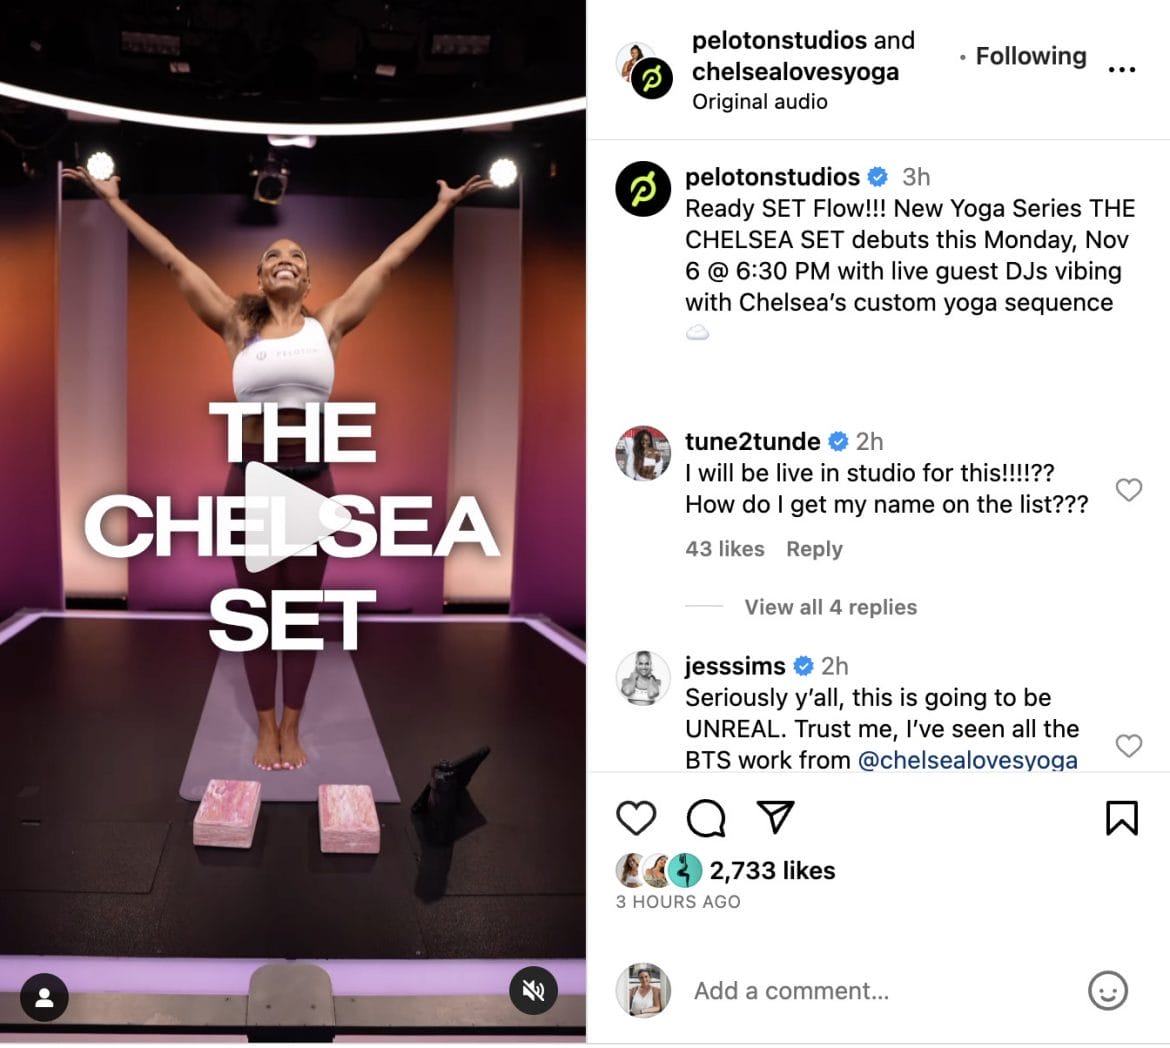 @PelotonStudios Instagram post announcing The Chelsea Set.